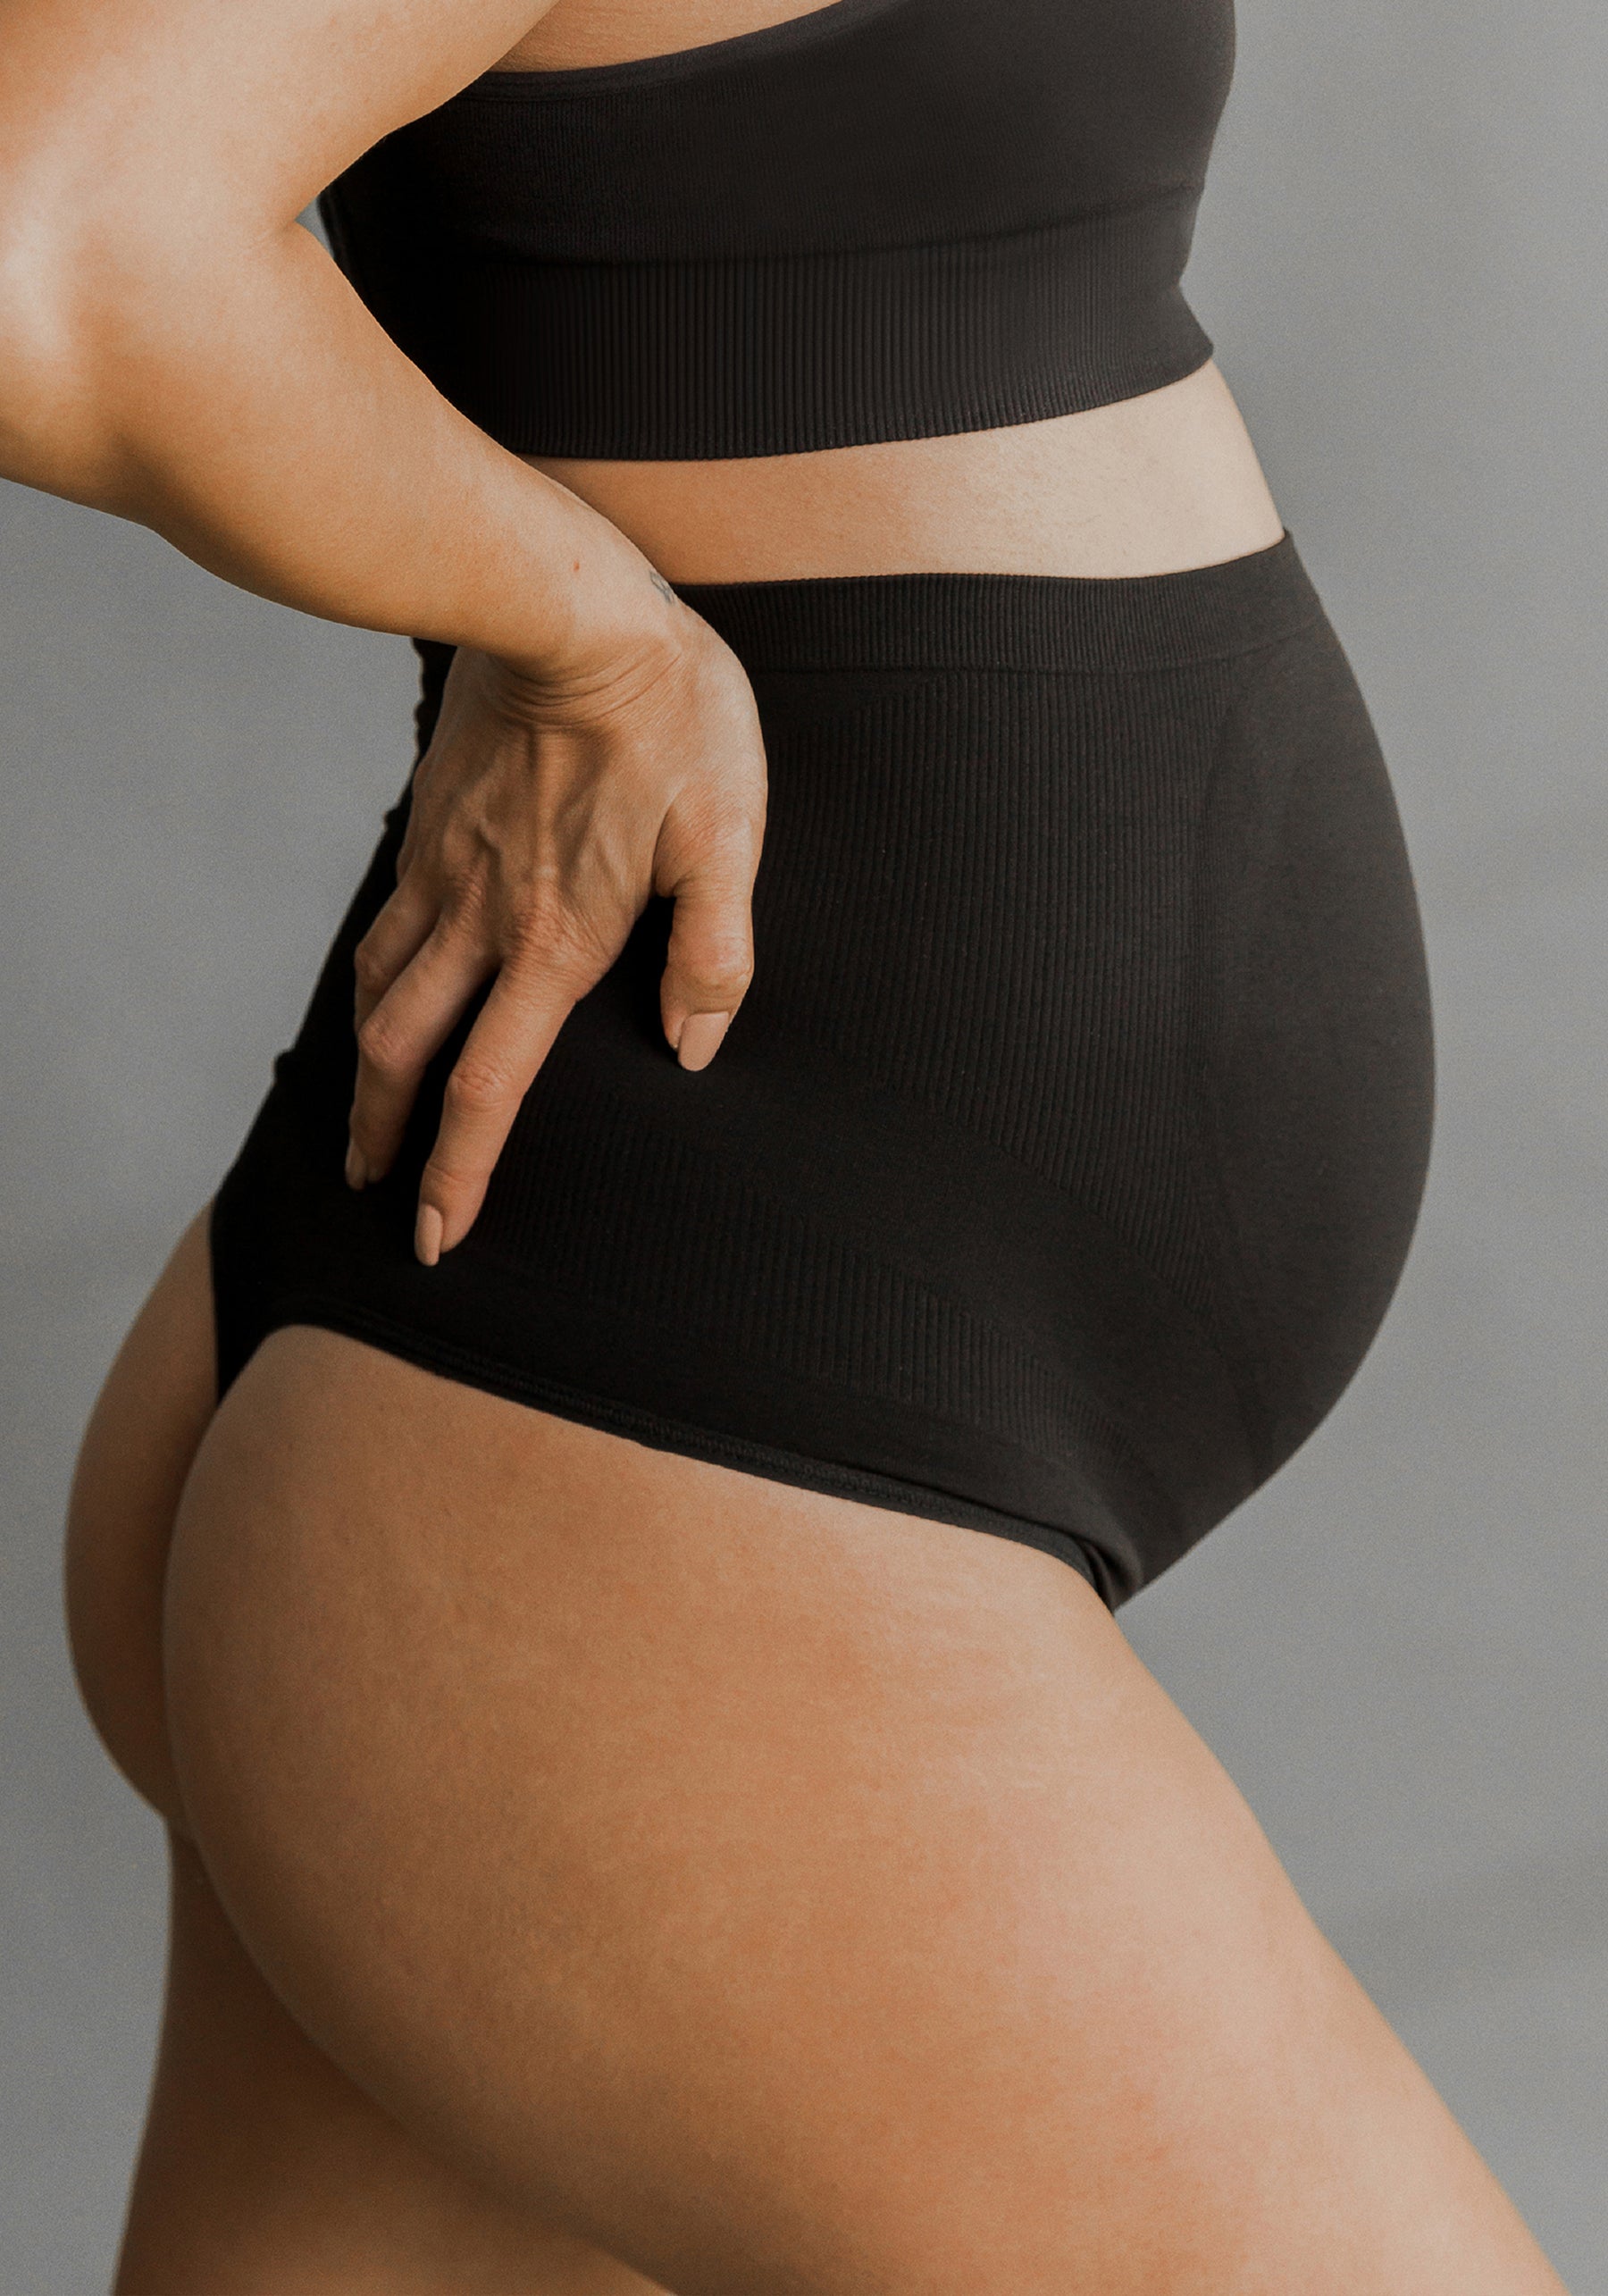 Maternity Underwear, Buy Women's Maternity Undies